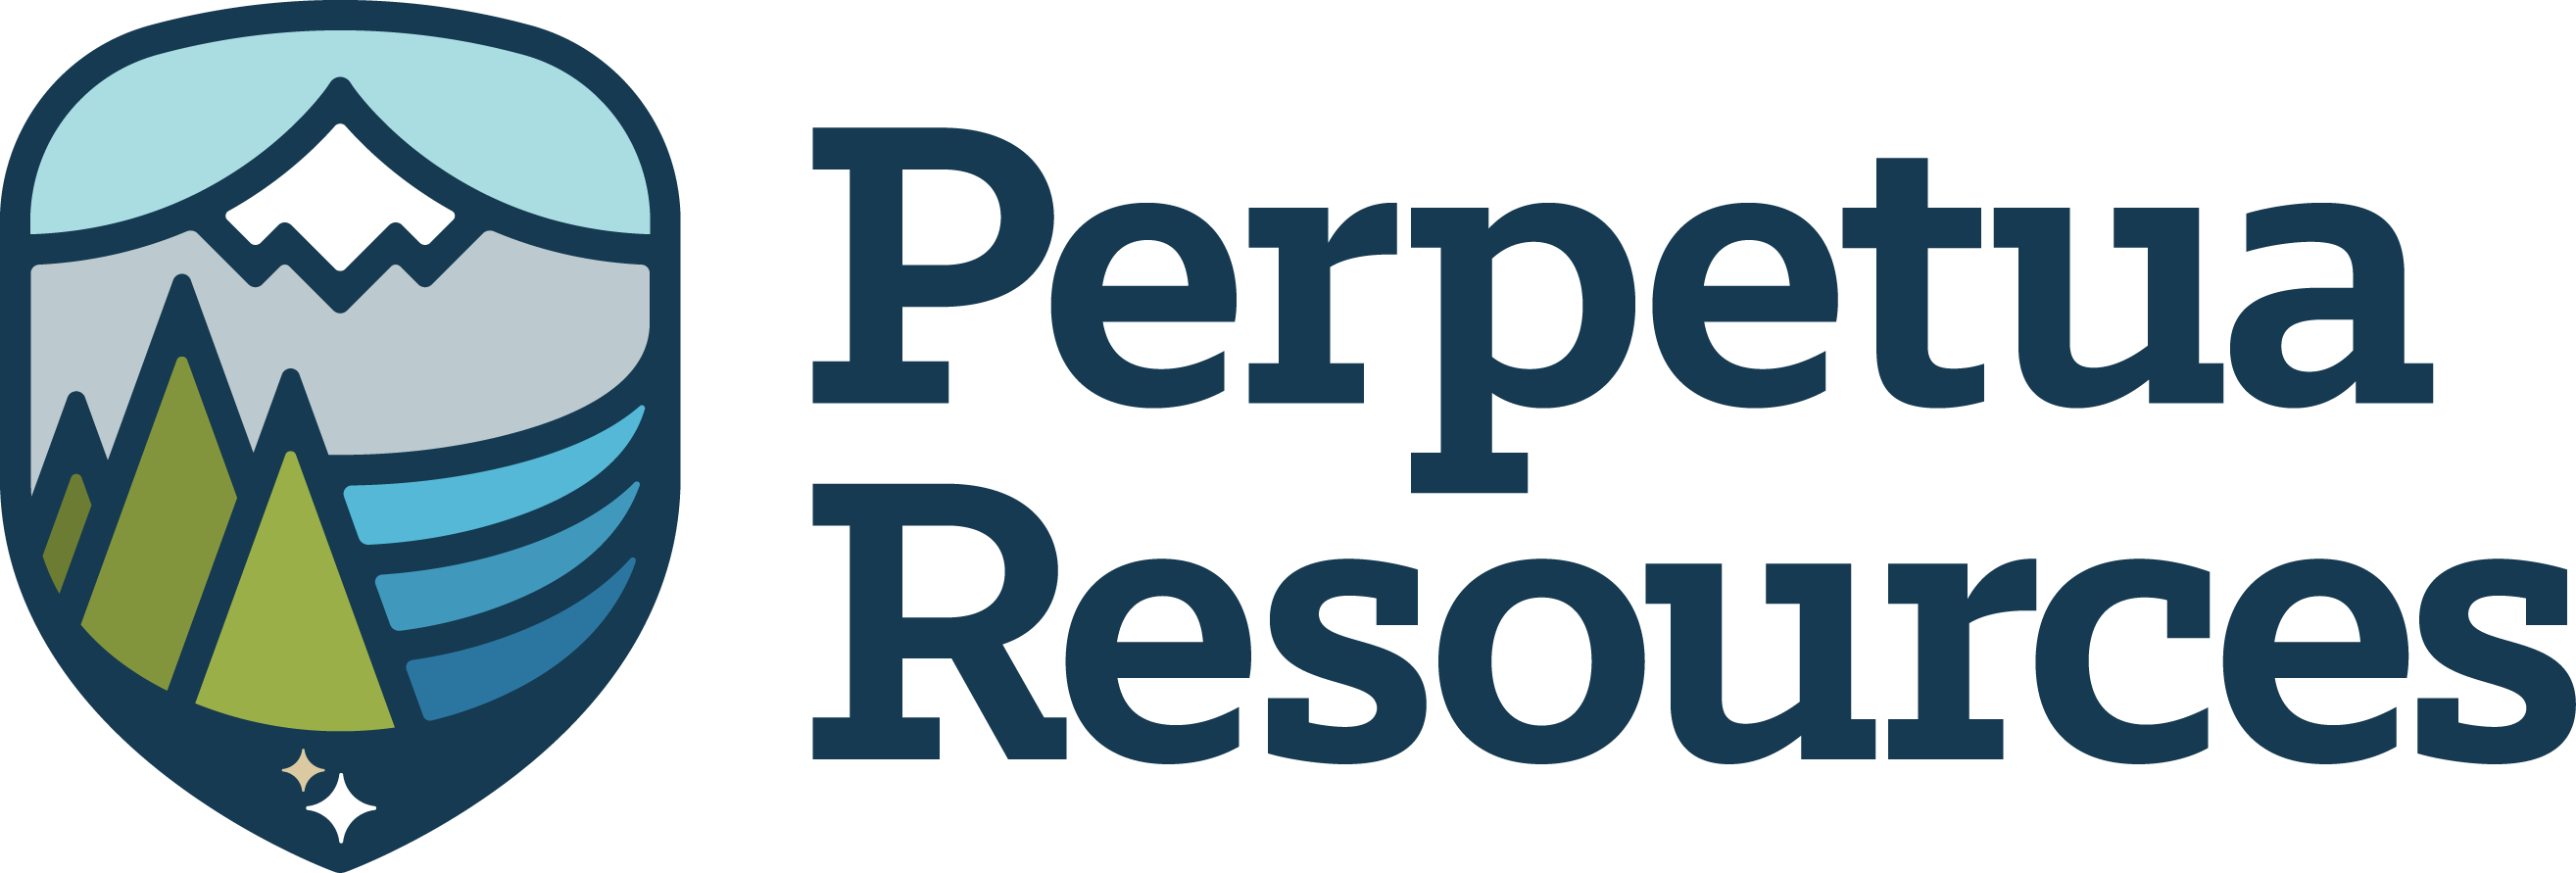 Perpetua Resources Logo